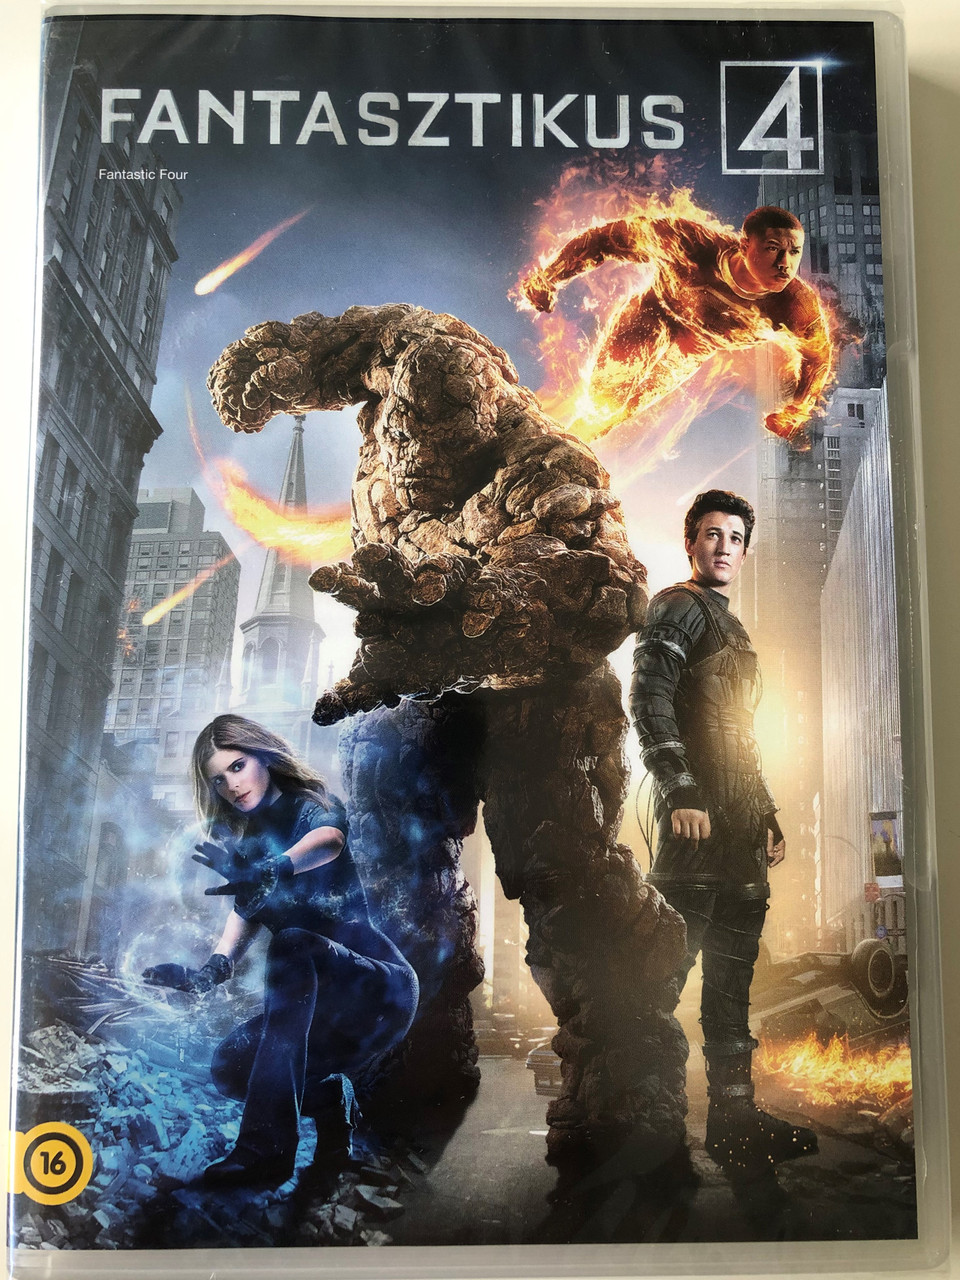 Fantastic Four DVD 2015 Fantasztikus 4 / Directed by Josh Trank / Starring:  Miles Teller, Michael B. Jordan, Kate Mara, Jamie Bell / Fant4stic -  bibleinmylanguage